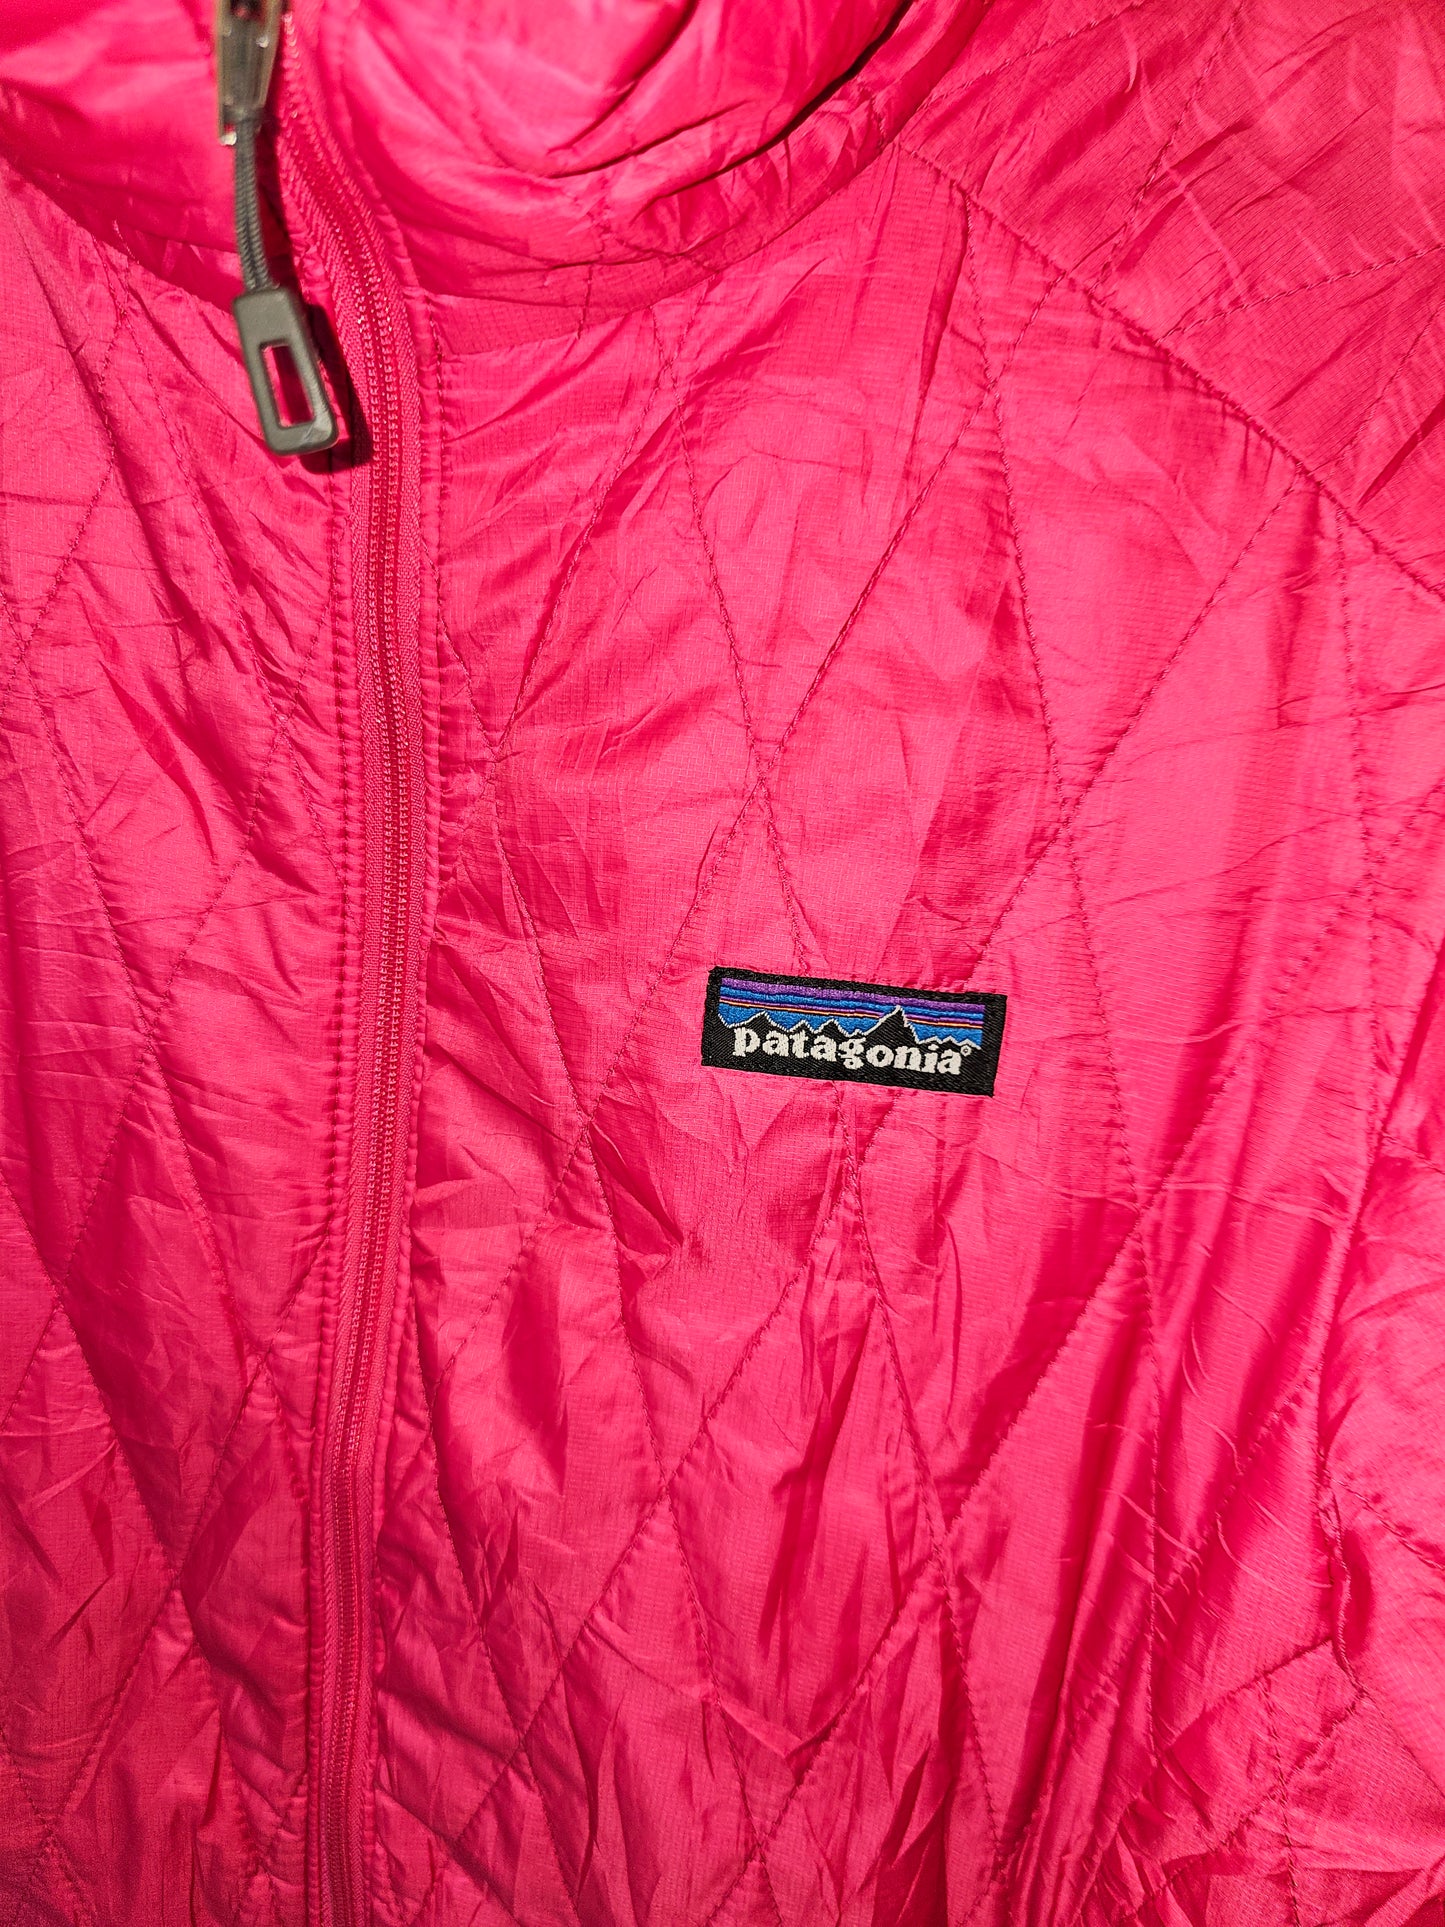 Patagonia Pink Quilted Jacket (M)